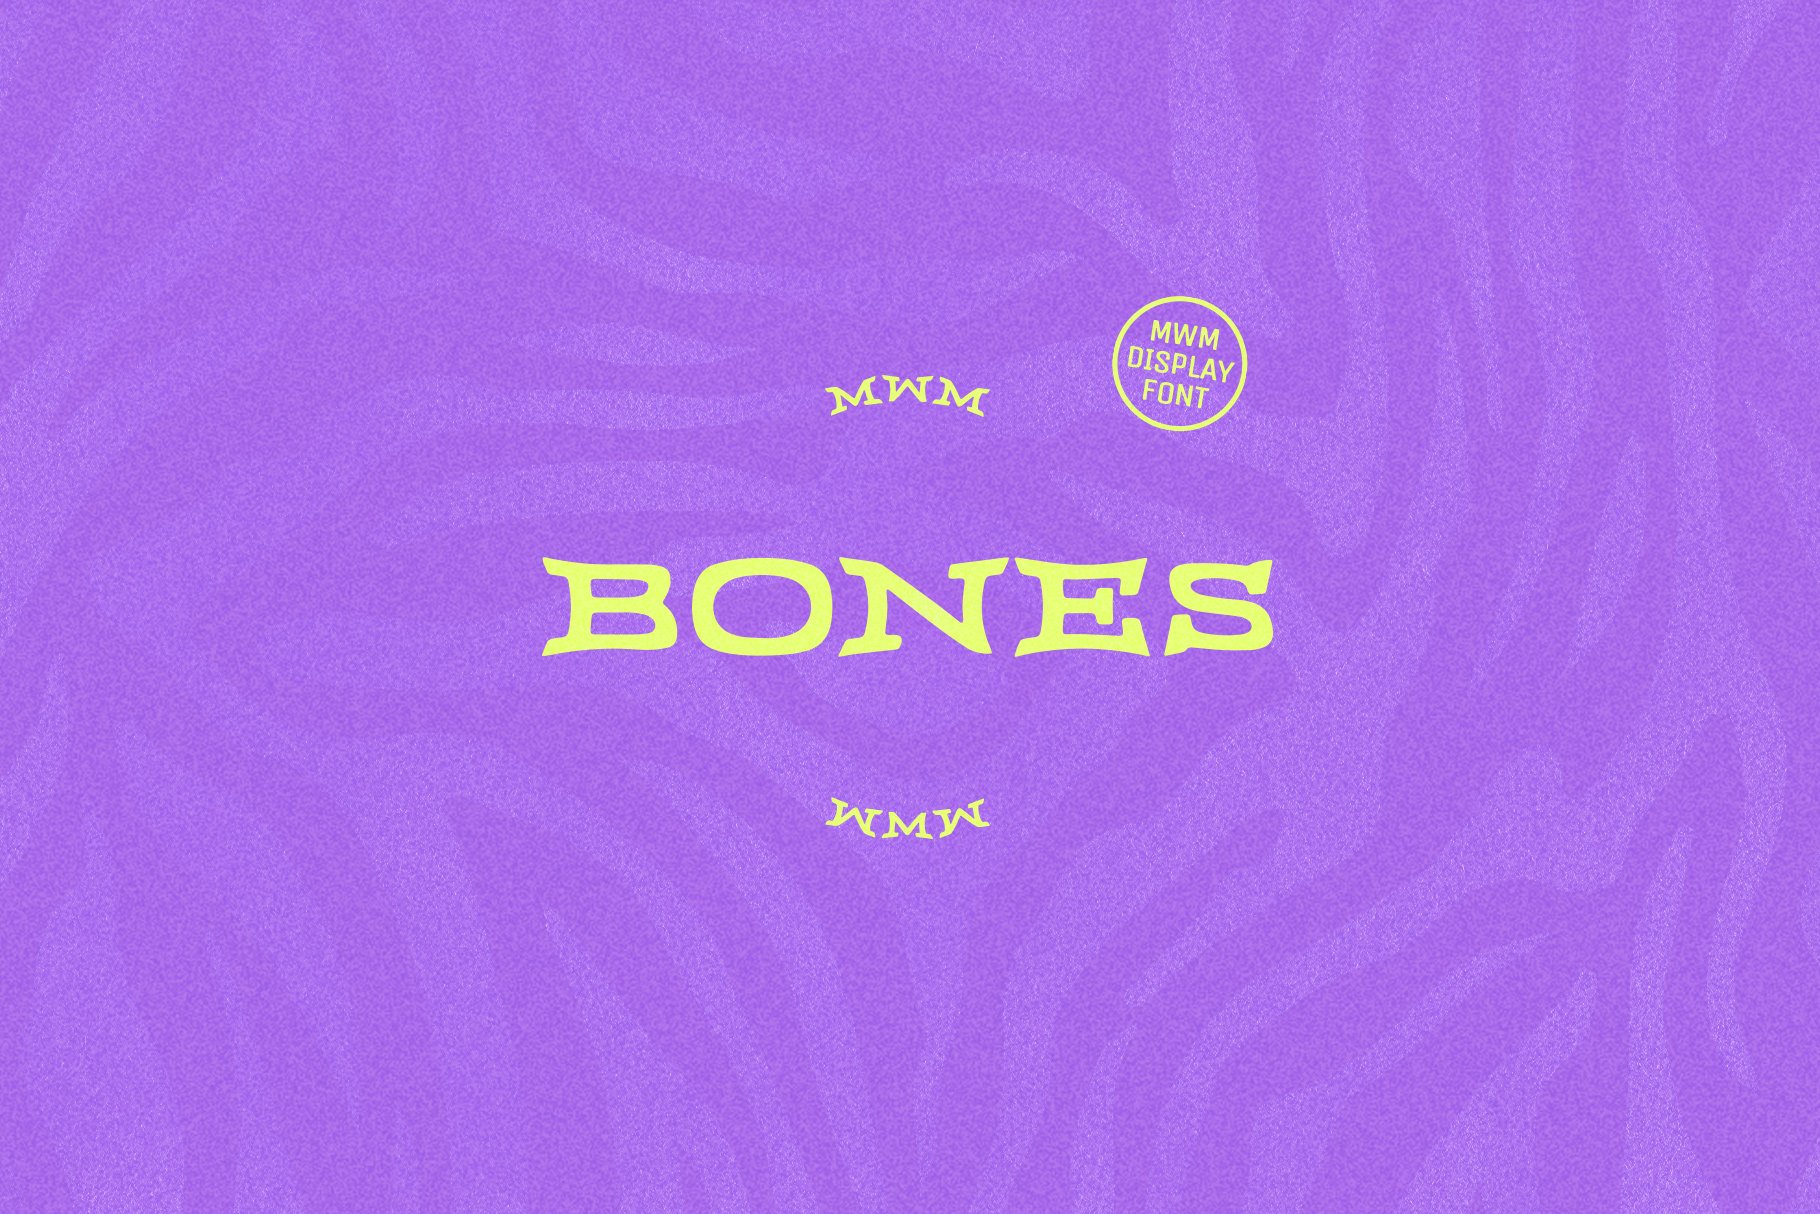 MWM Bones cover image.